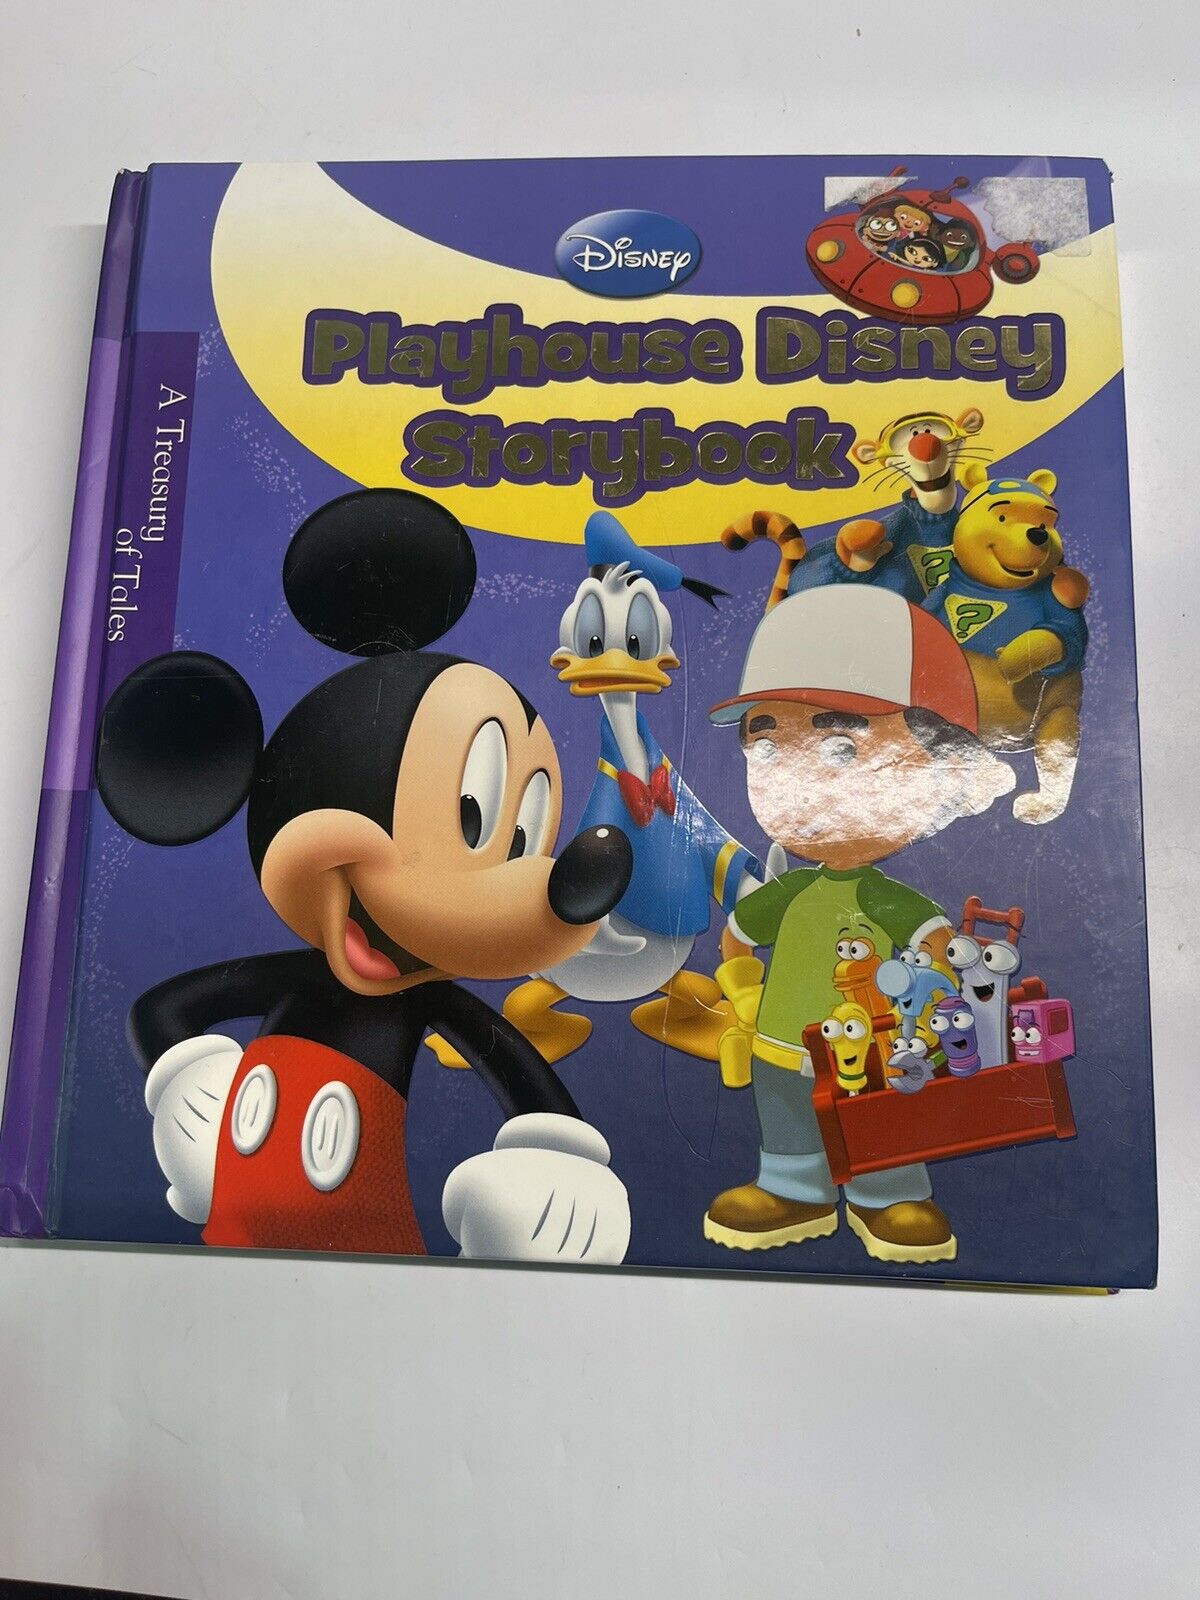 Playhouse Disney Storybook (Disney Storybook Collections) 2009 Very Good Conditi